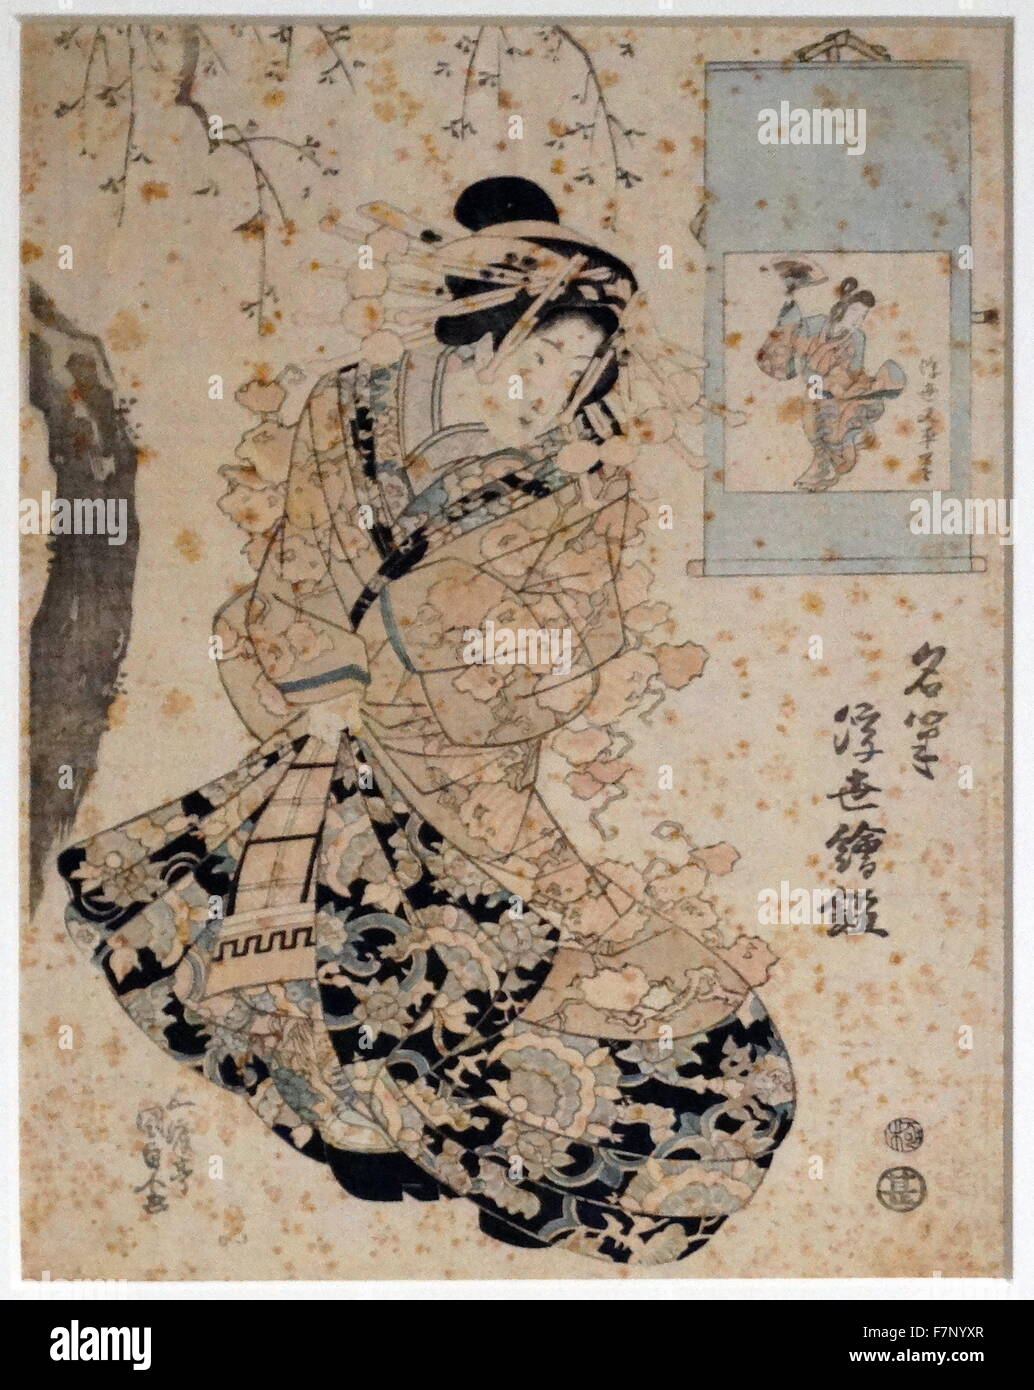 (Meishitsu Ukiyo Matabei kagami ukiyo-e) par Utagawa Kunisada (1786-1865) designer japonais d'estampes ukiyo-e. Datée 1820 Banque D'Images